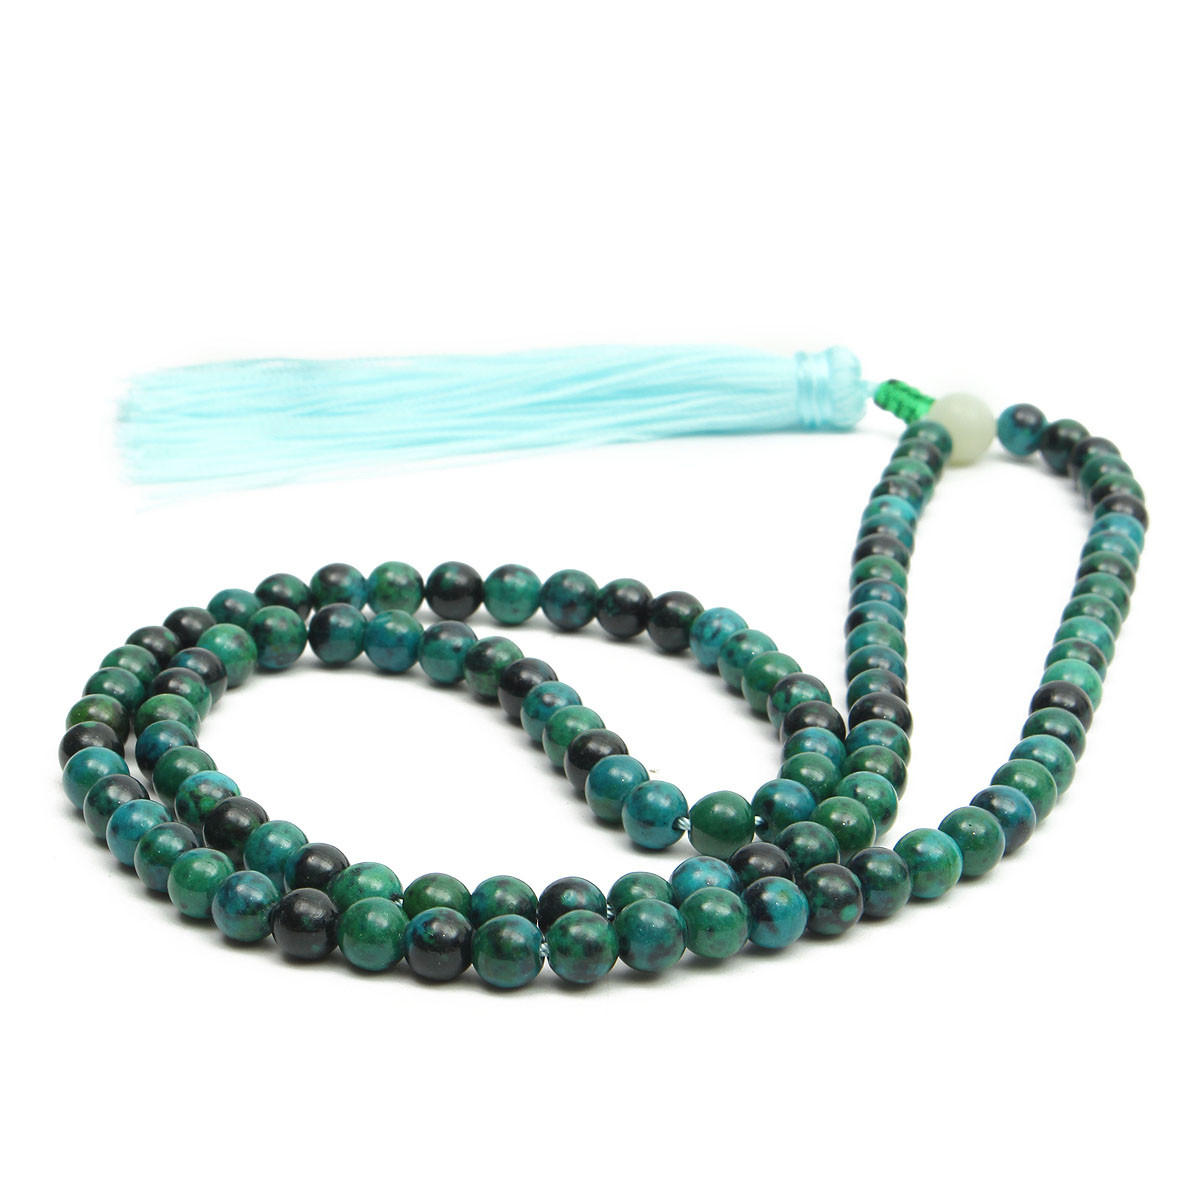 108pcs 6mm dark green jade prayer beads bracelet necklace jewelry at ...